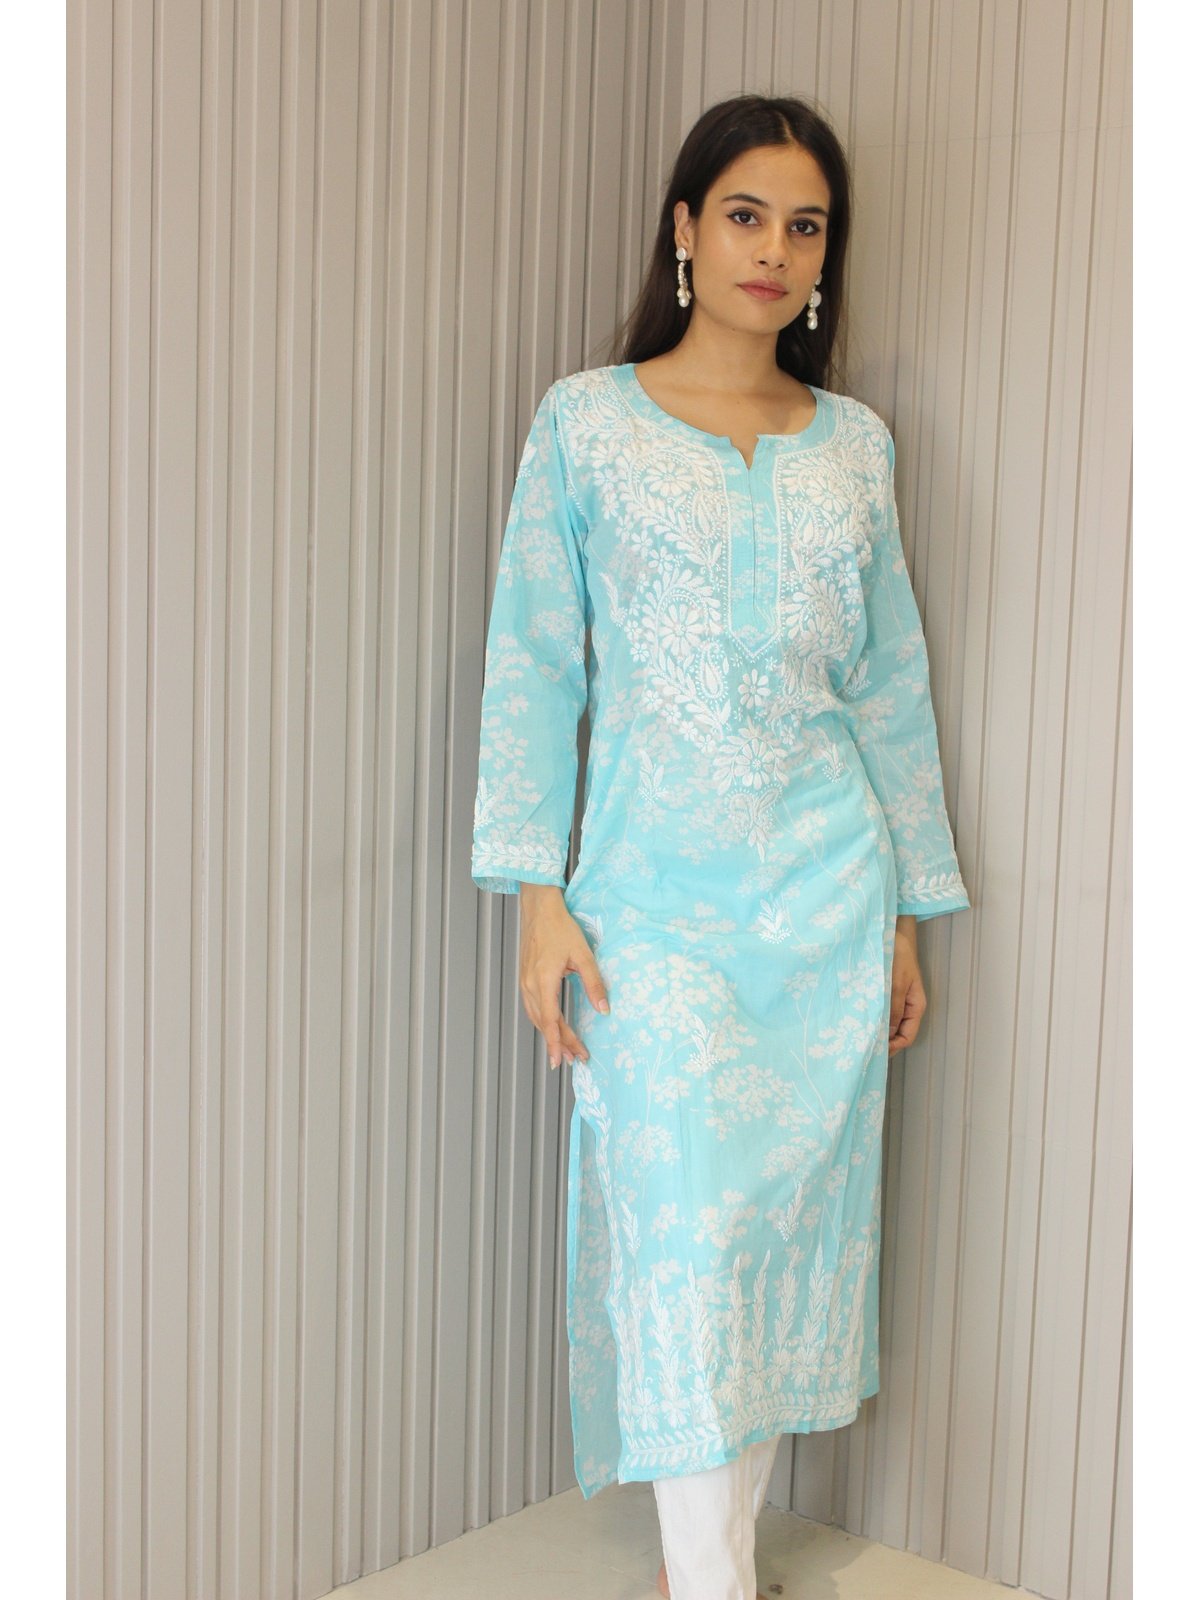 Wholesale Lucknow Chikan Suits | Designer Chikankari Kurtis | Anarkali  Online | Fancy dress design, Neck designs for suits, Chikankari suits